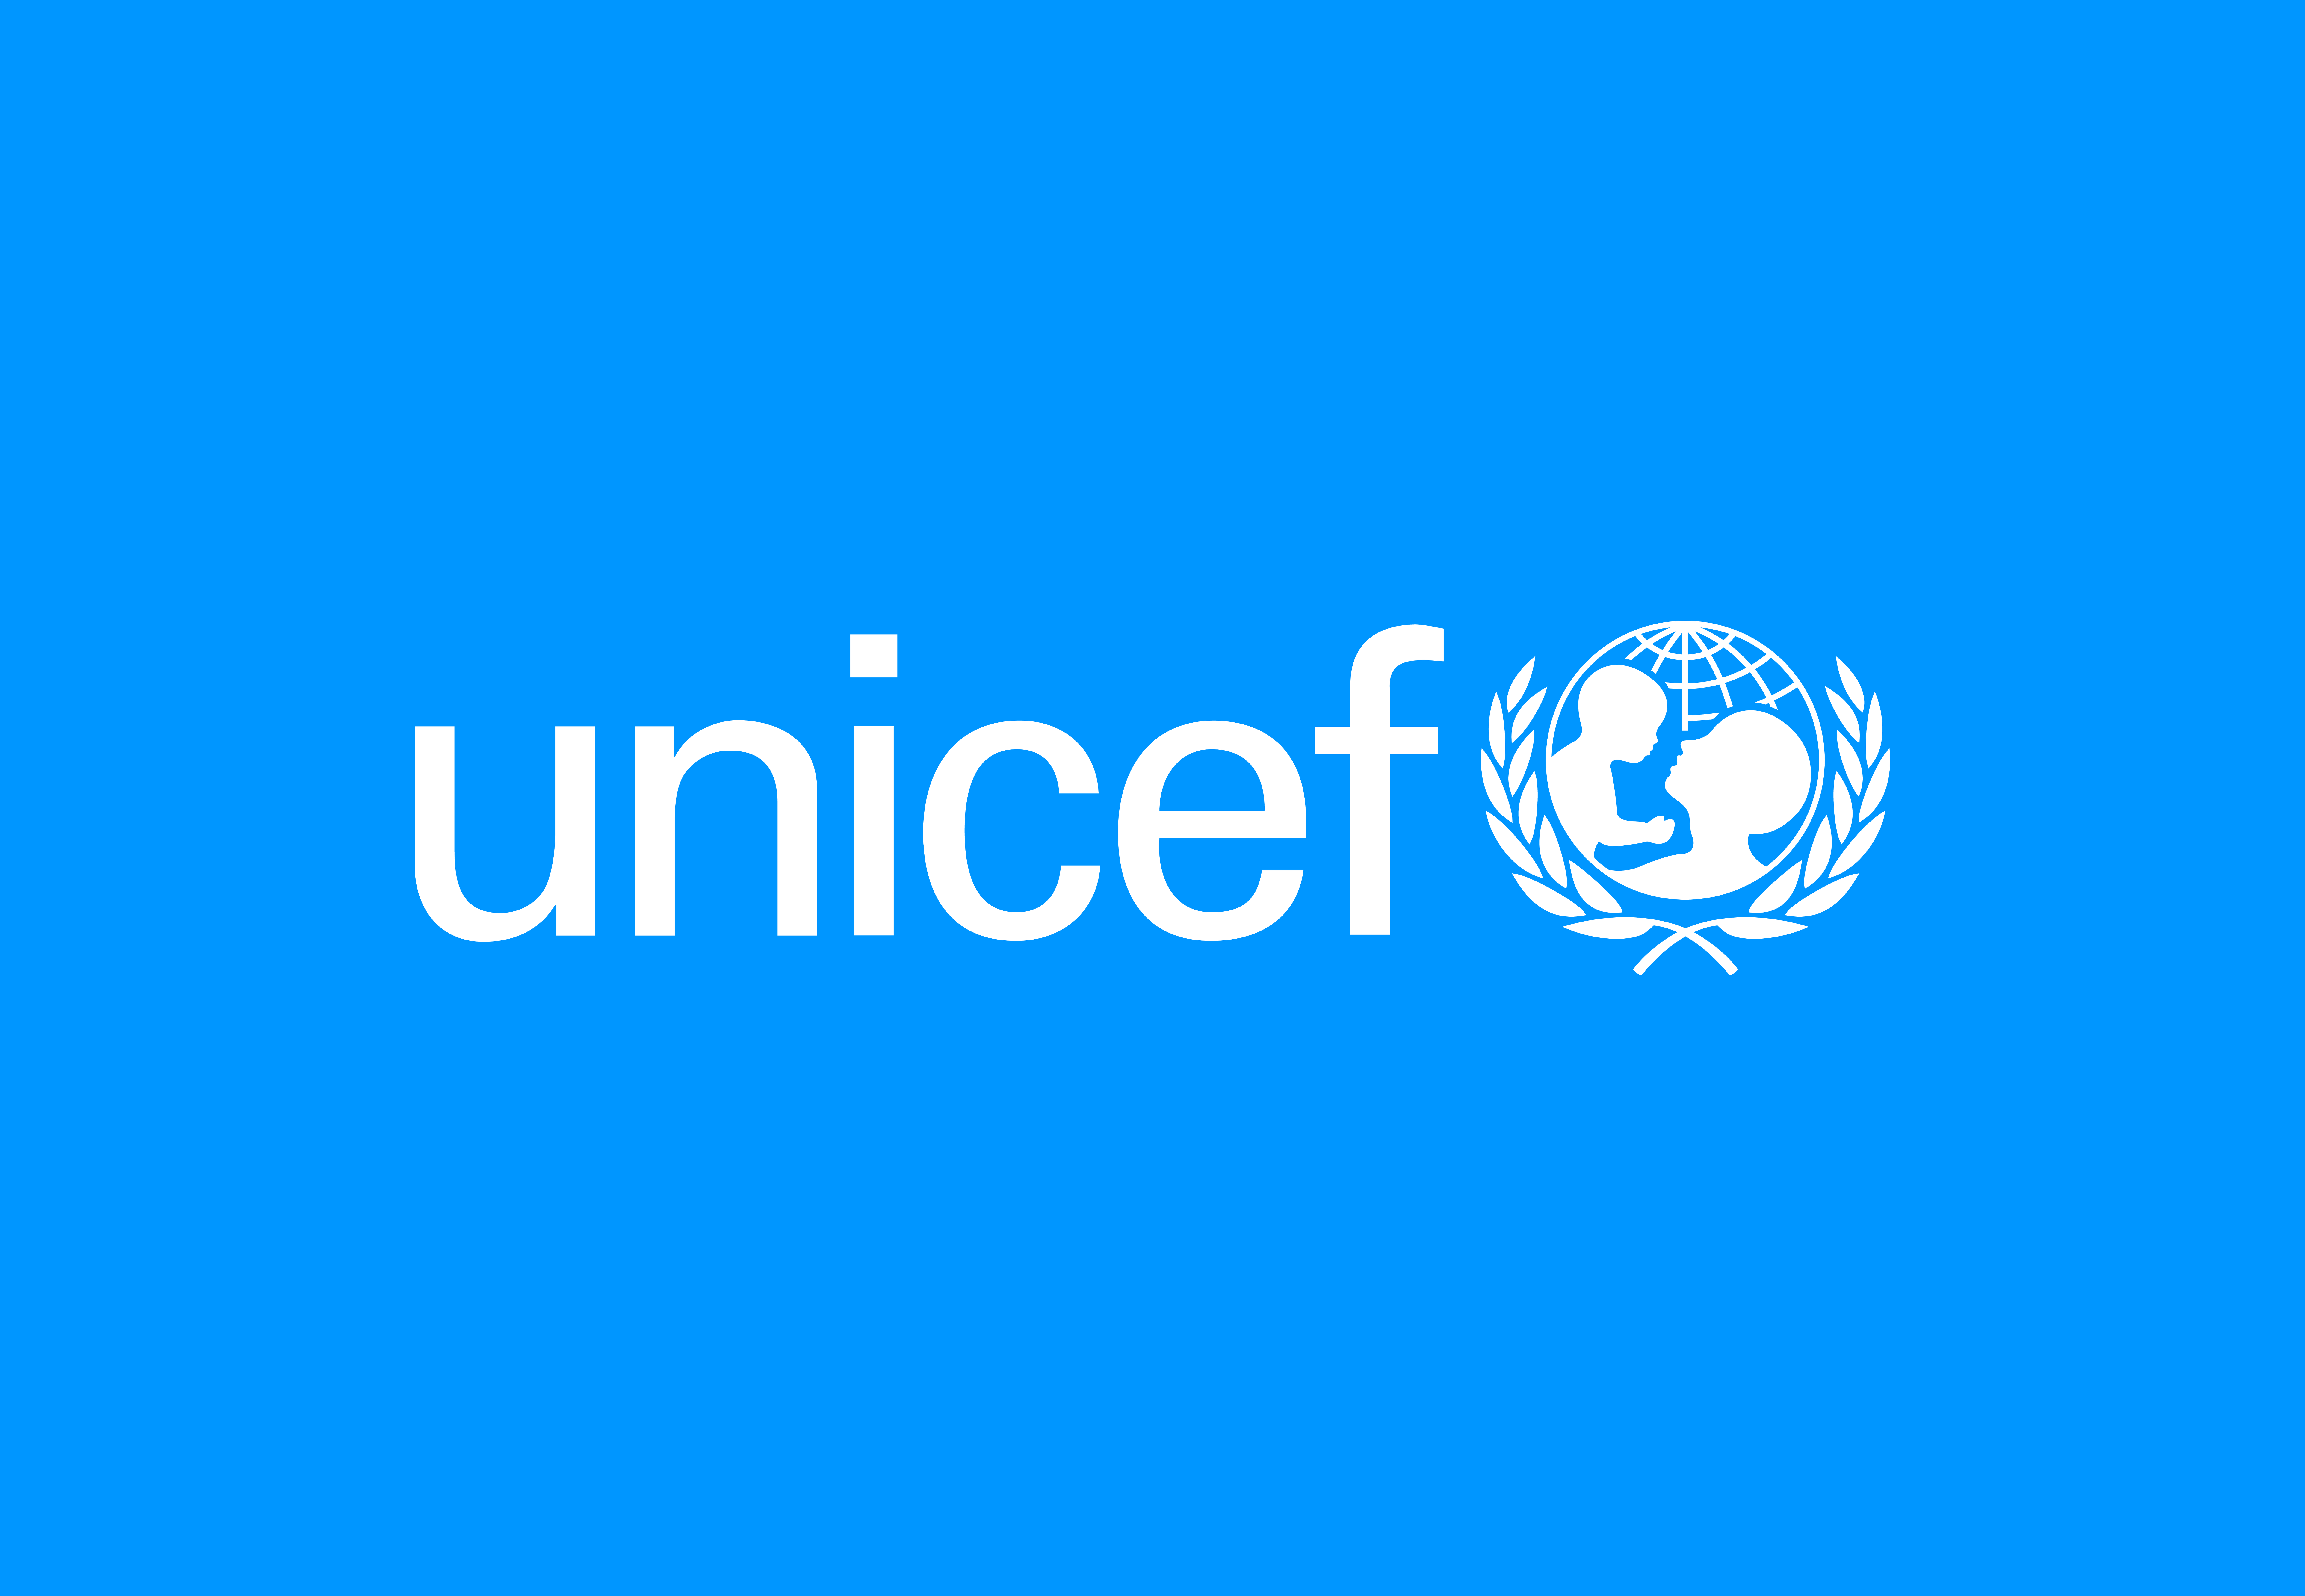 Hoe Ethereum erin slaagde om UNICEF blockchain te laten omarmen